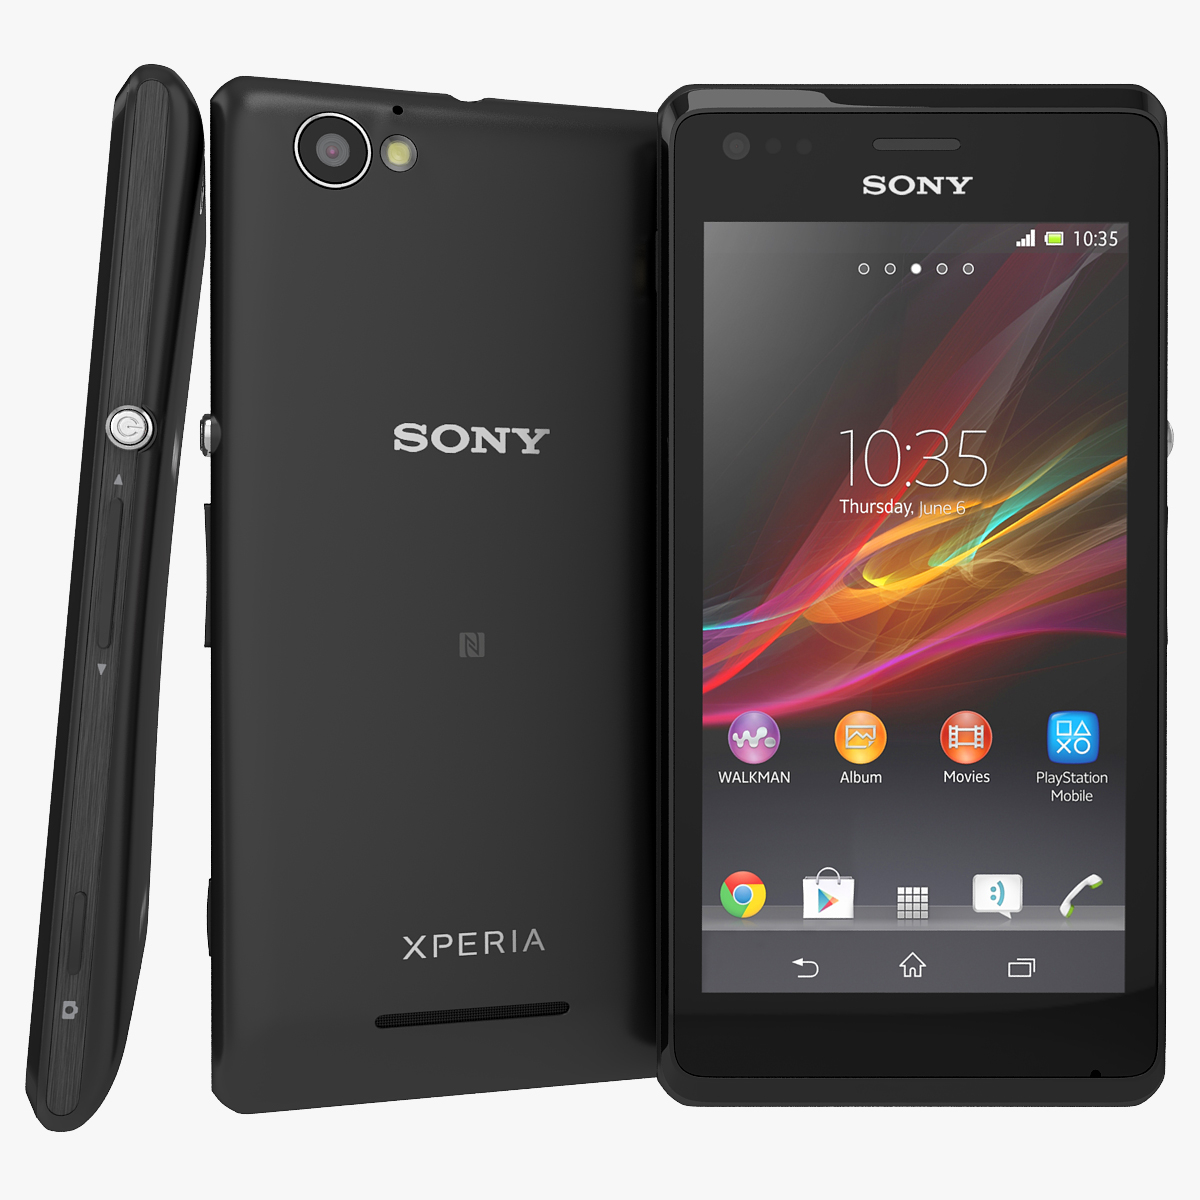 Xperia авито. Sony Xperia c2005. Sony Xperia m c2005. Sony Xperia c1905. Sony Xperia c6503.